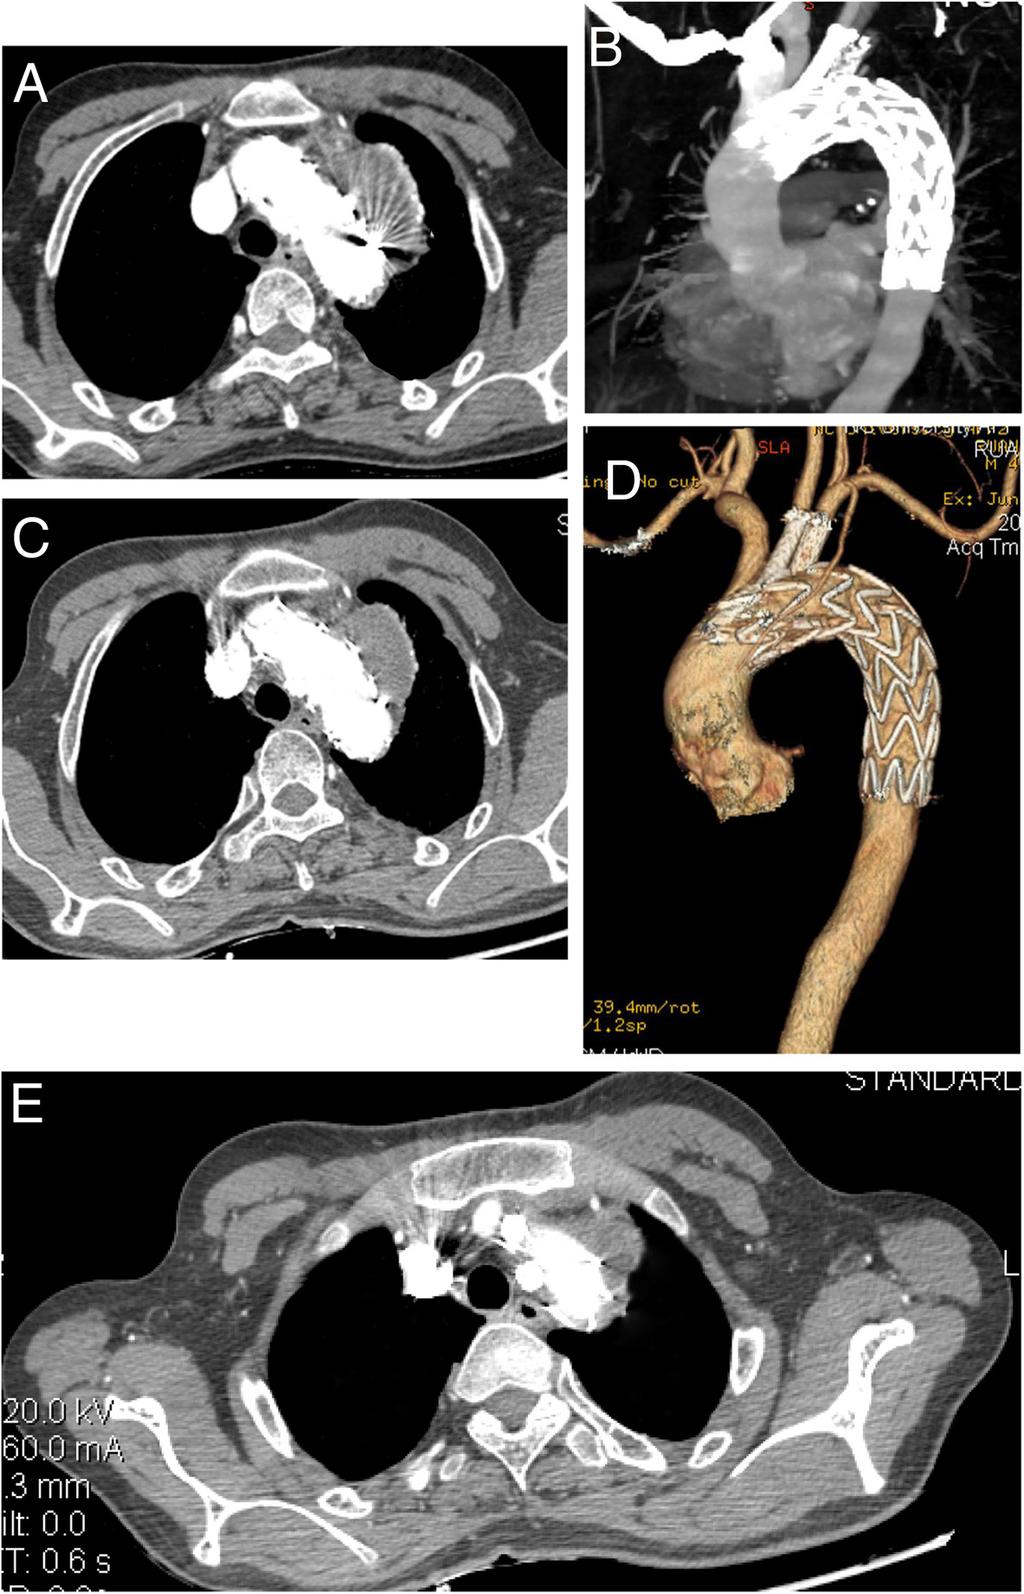 Zhou et al. Journal of Cardiothoracic Surgery 2013, 8:80 Page 3 of 5 enlargement of the pseudoaneurysm. The endoprosthesis intheaorticarchwerepatent,withoutevidenceofproximal endoleak.